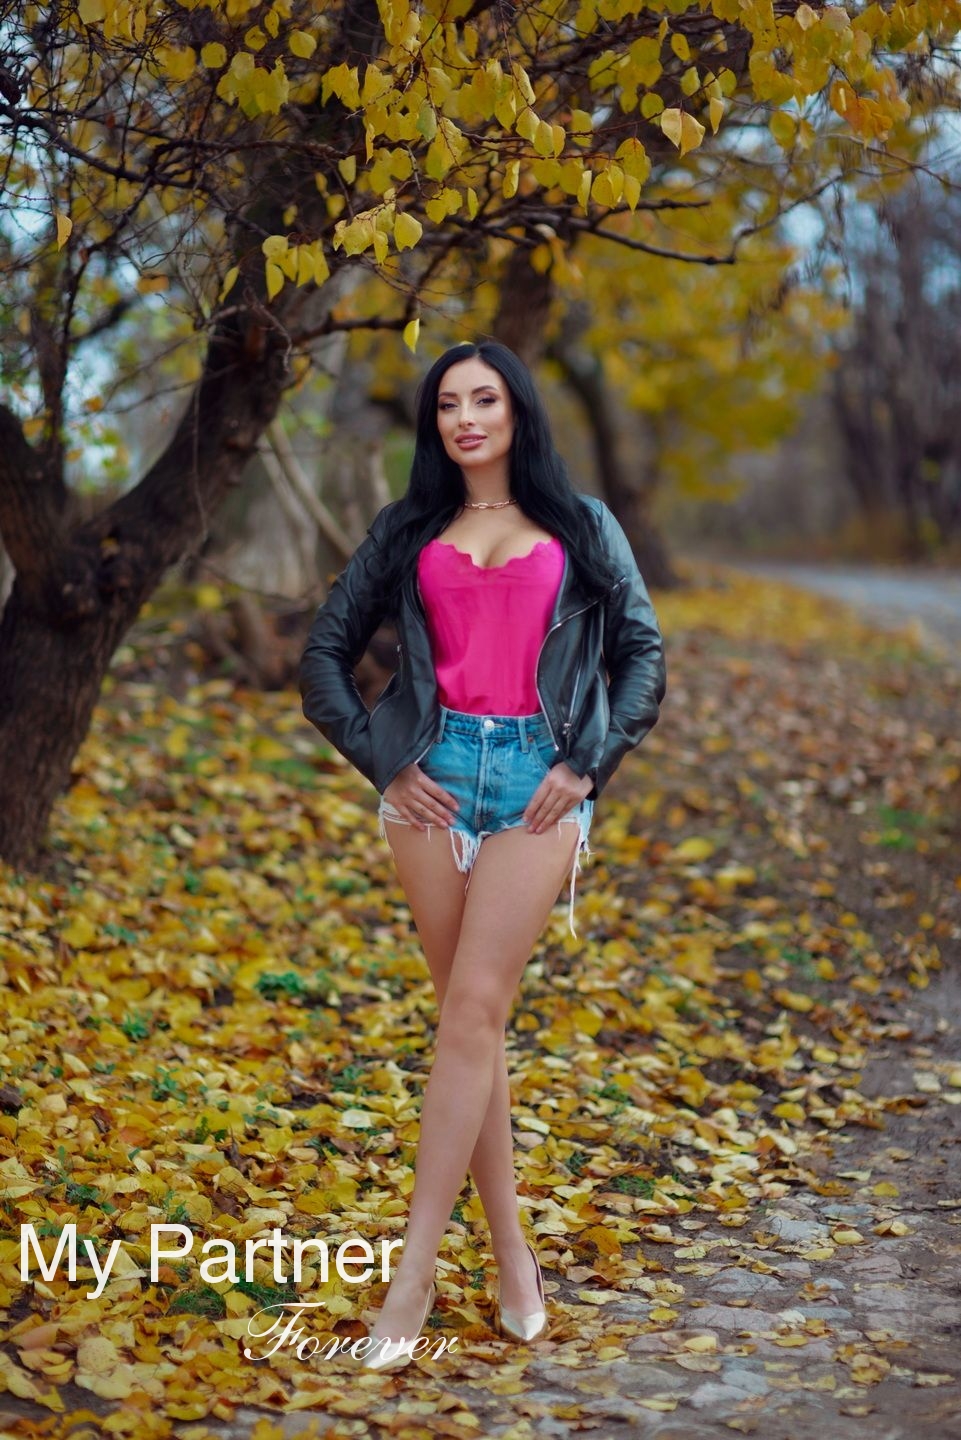 Dating Service to Meet Sexy Ukrainian Lady Olga from Kharkov, Ukraine